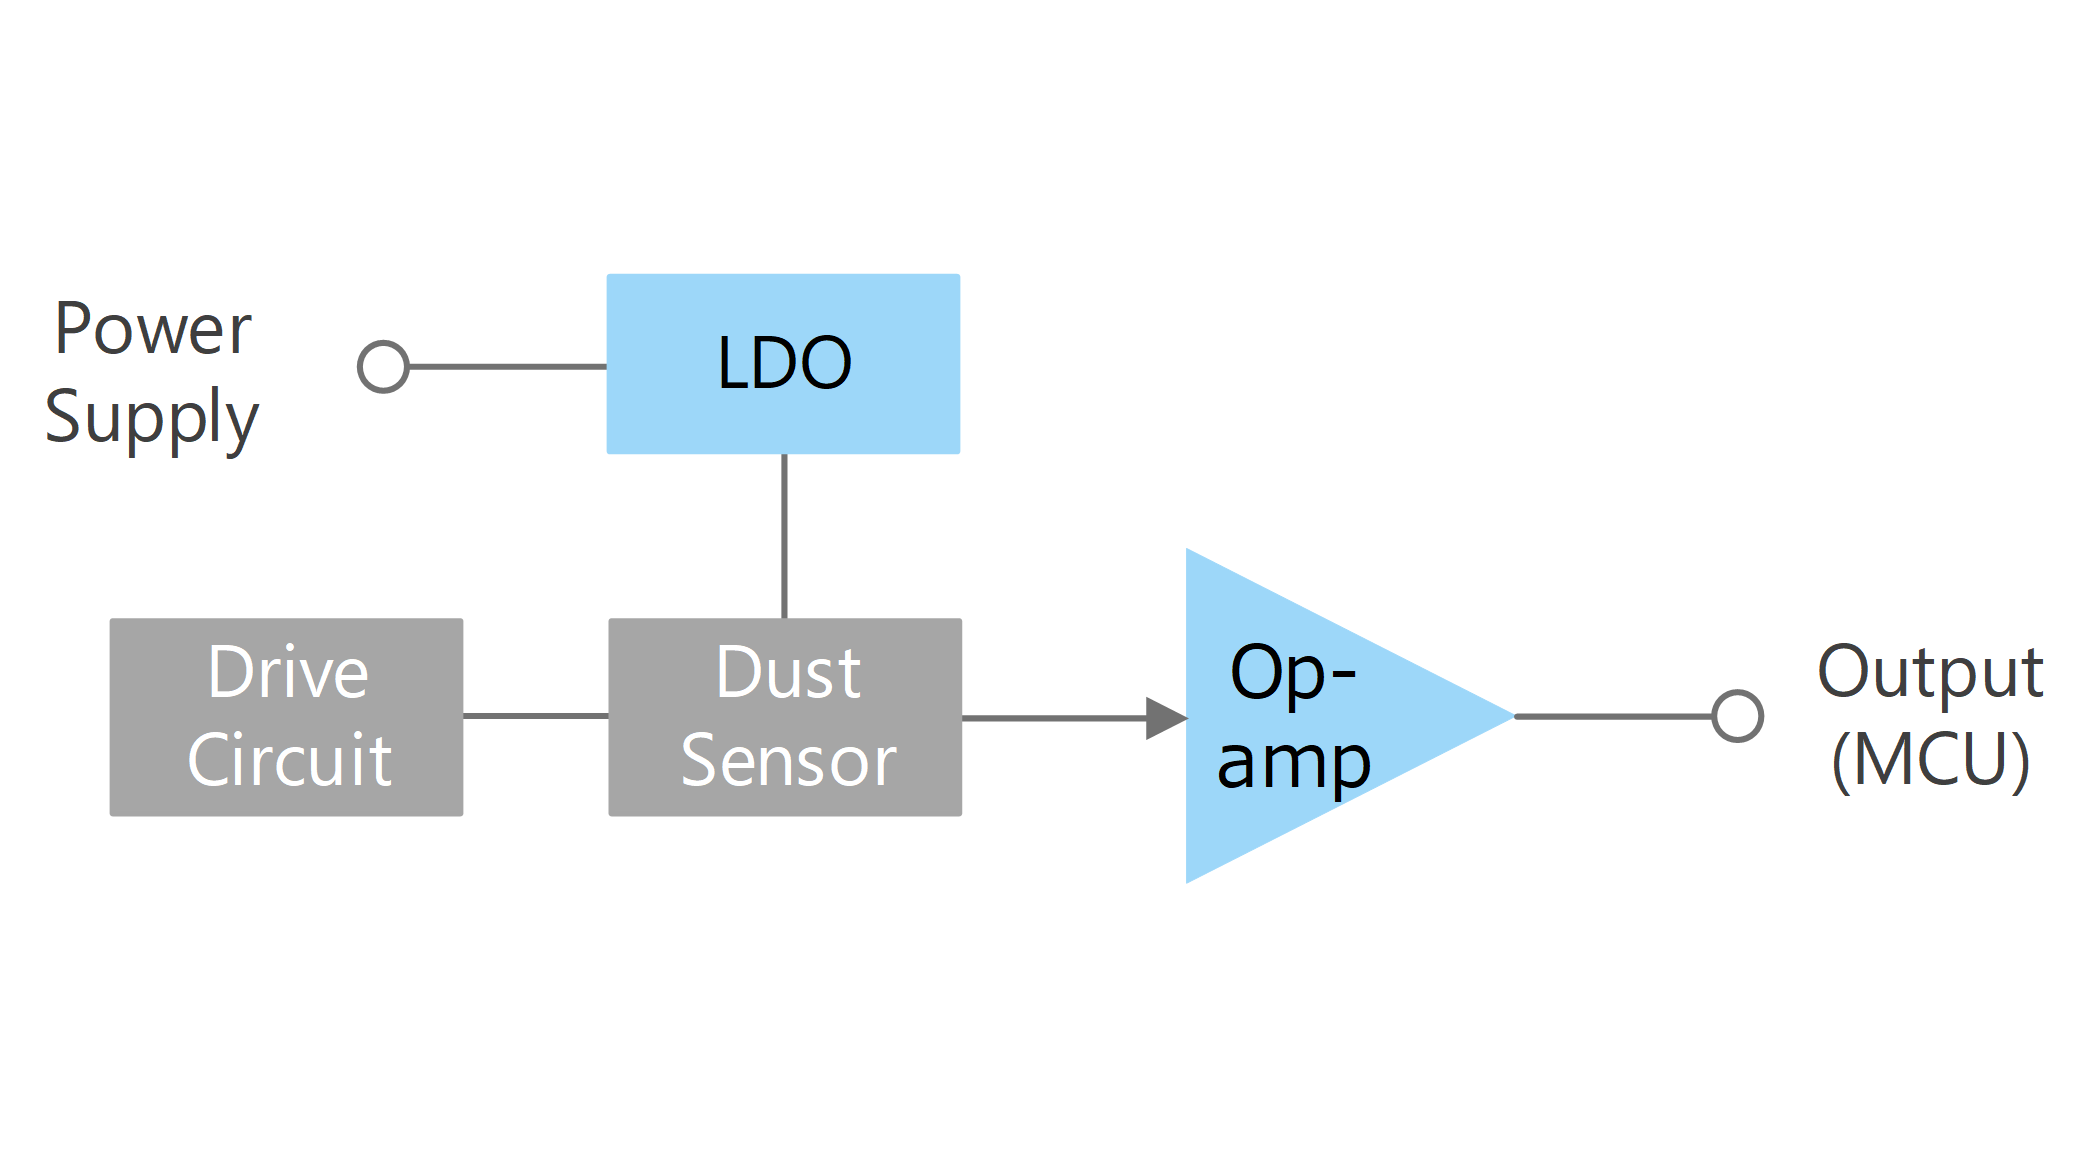 Dust sensor circuit